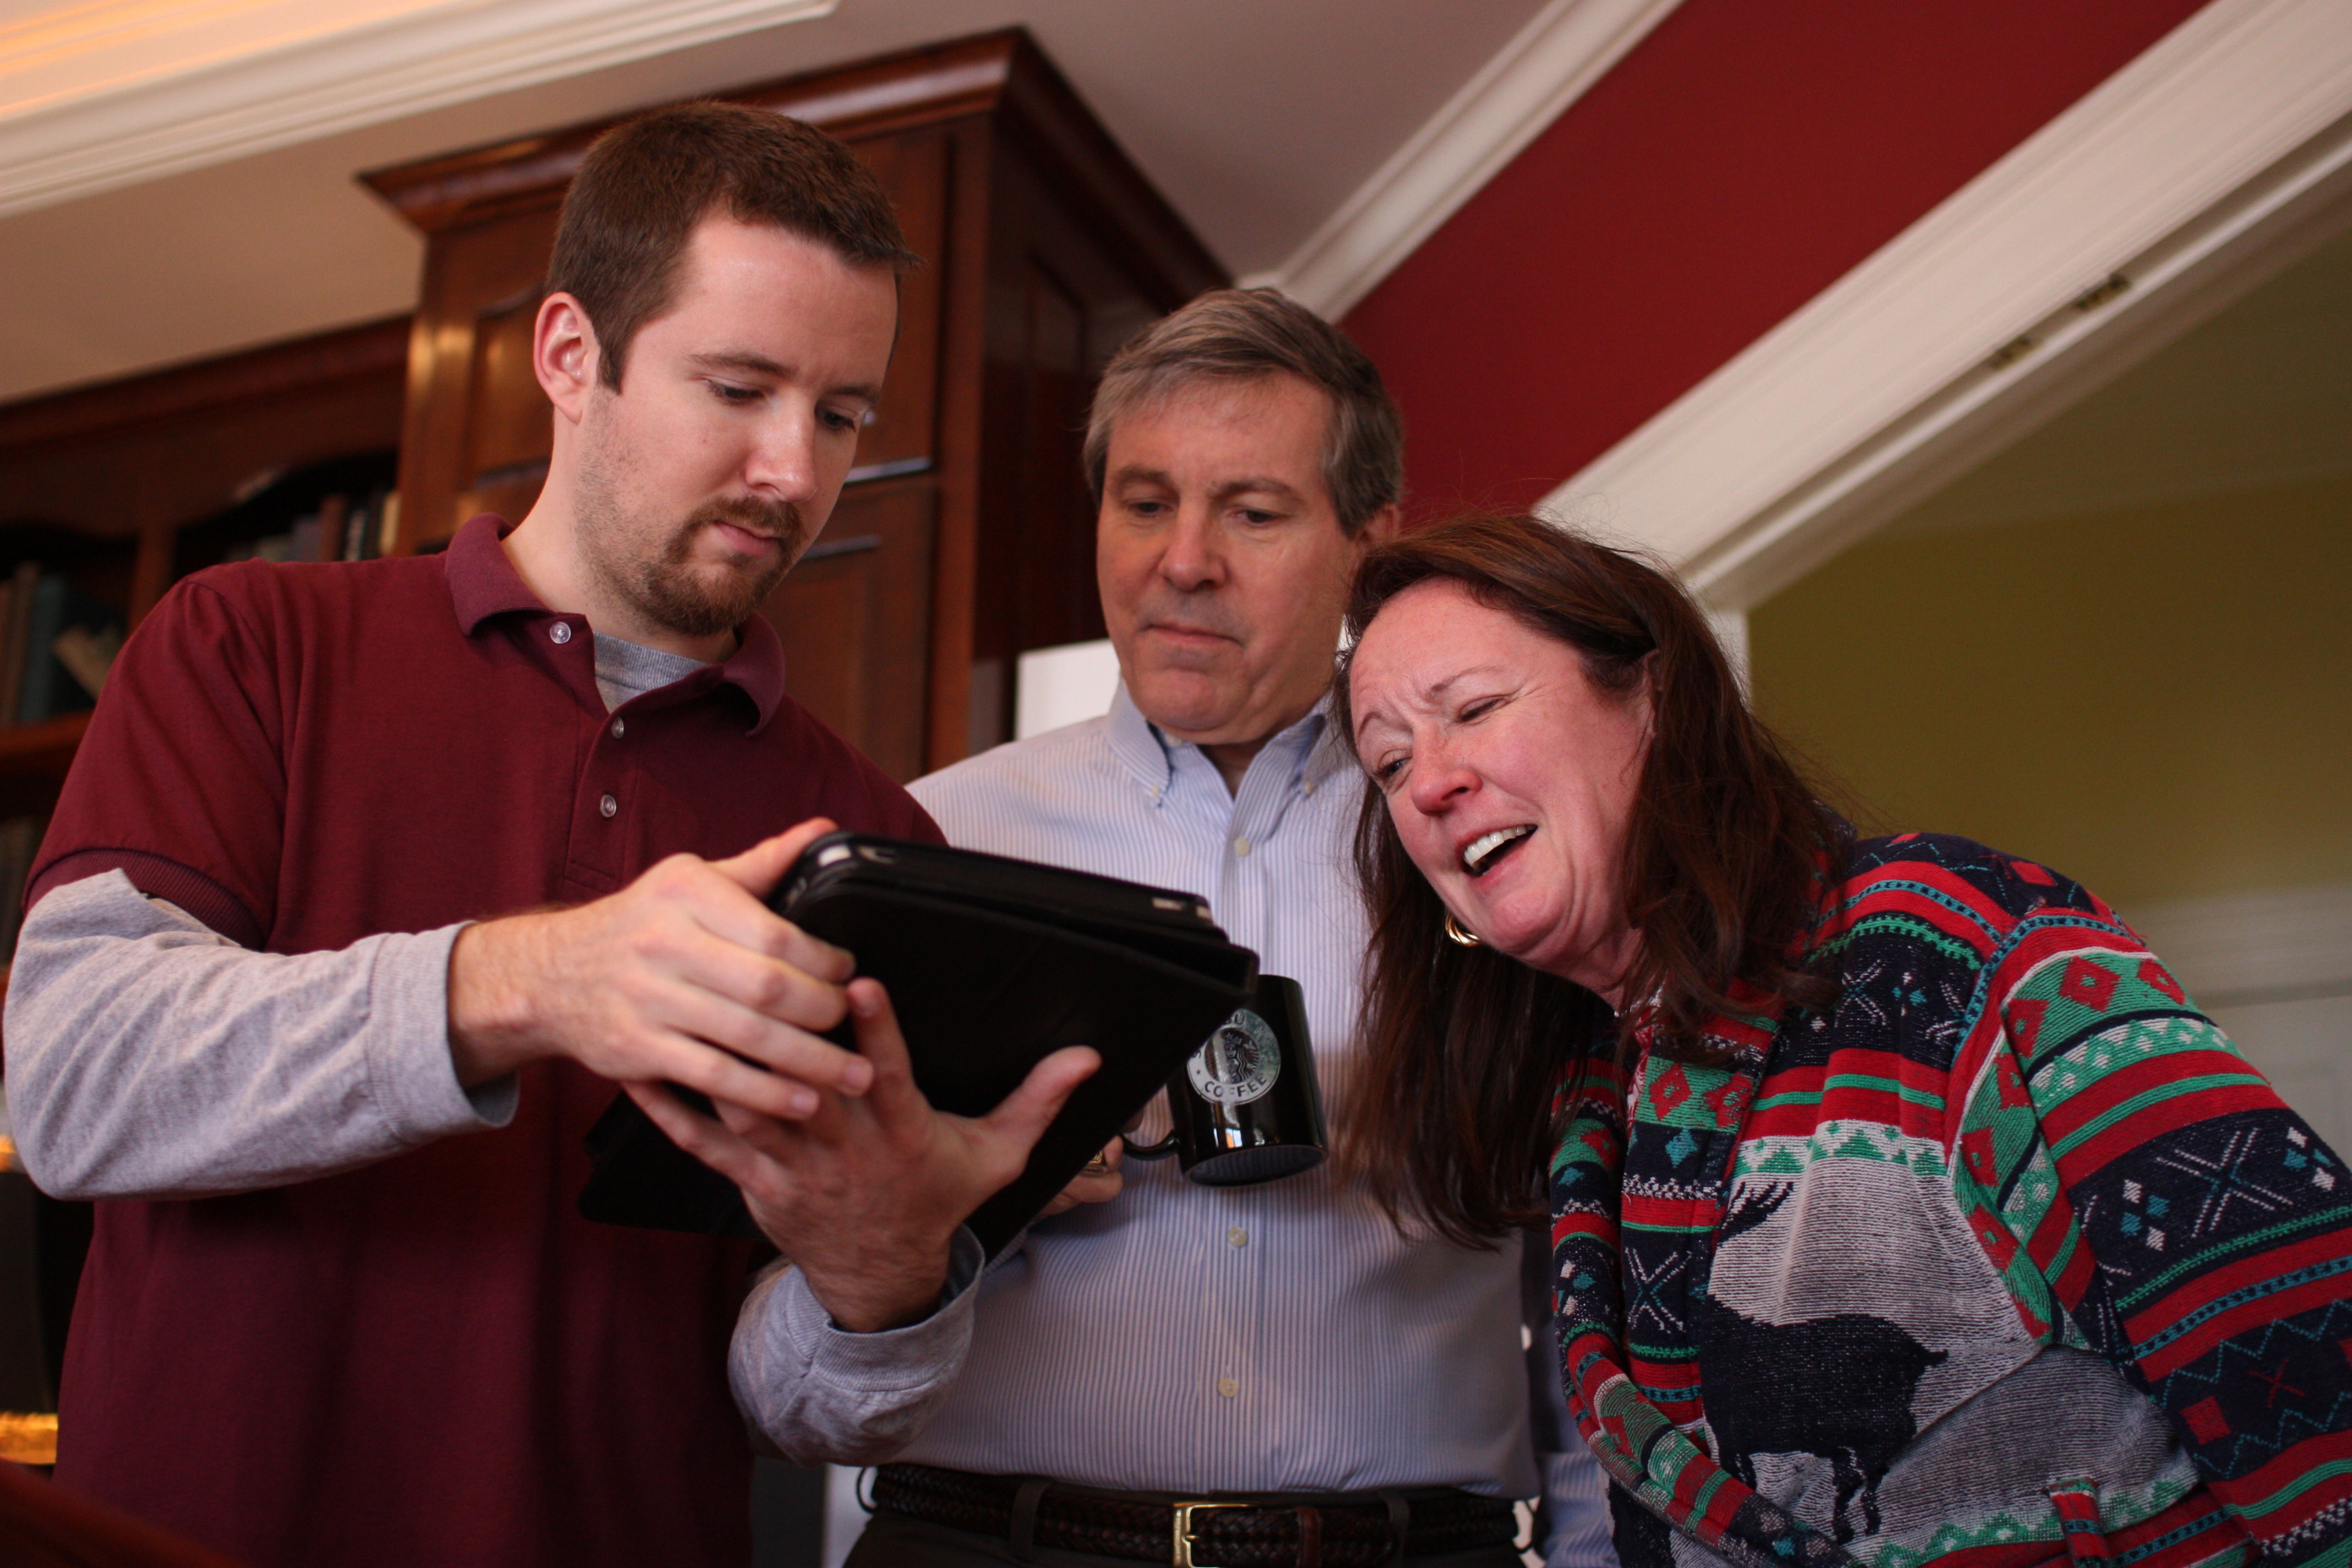 Hampton, Dad, and Mom on an iPad